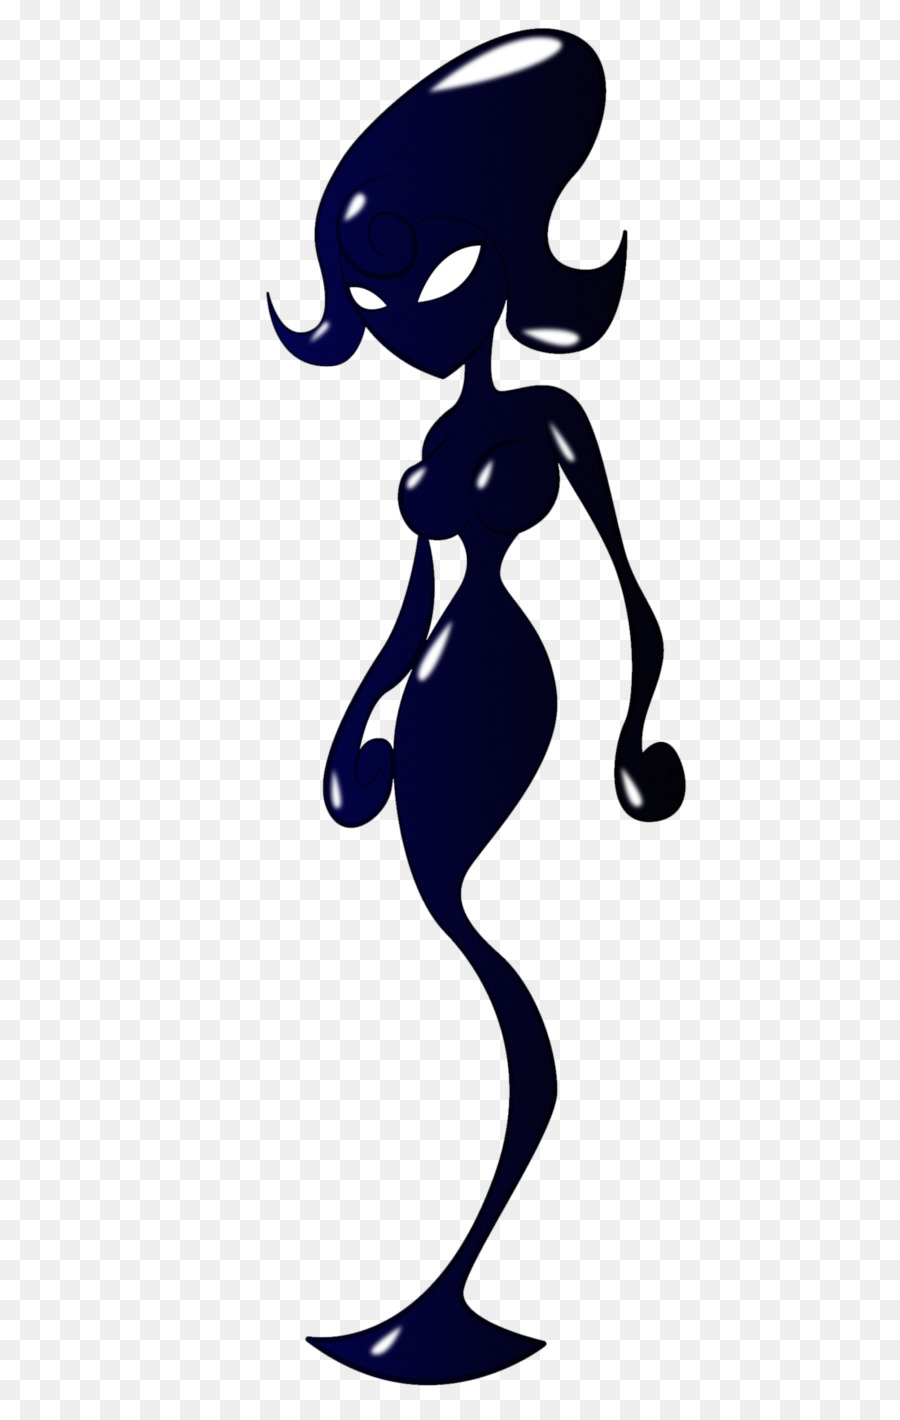 Illustration Clip art Mermaid Silhouette Black - eternal darkness wallpaper png download - 565*1412 - Free Transparent Mermaid png Download.